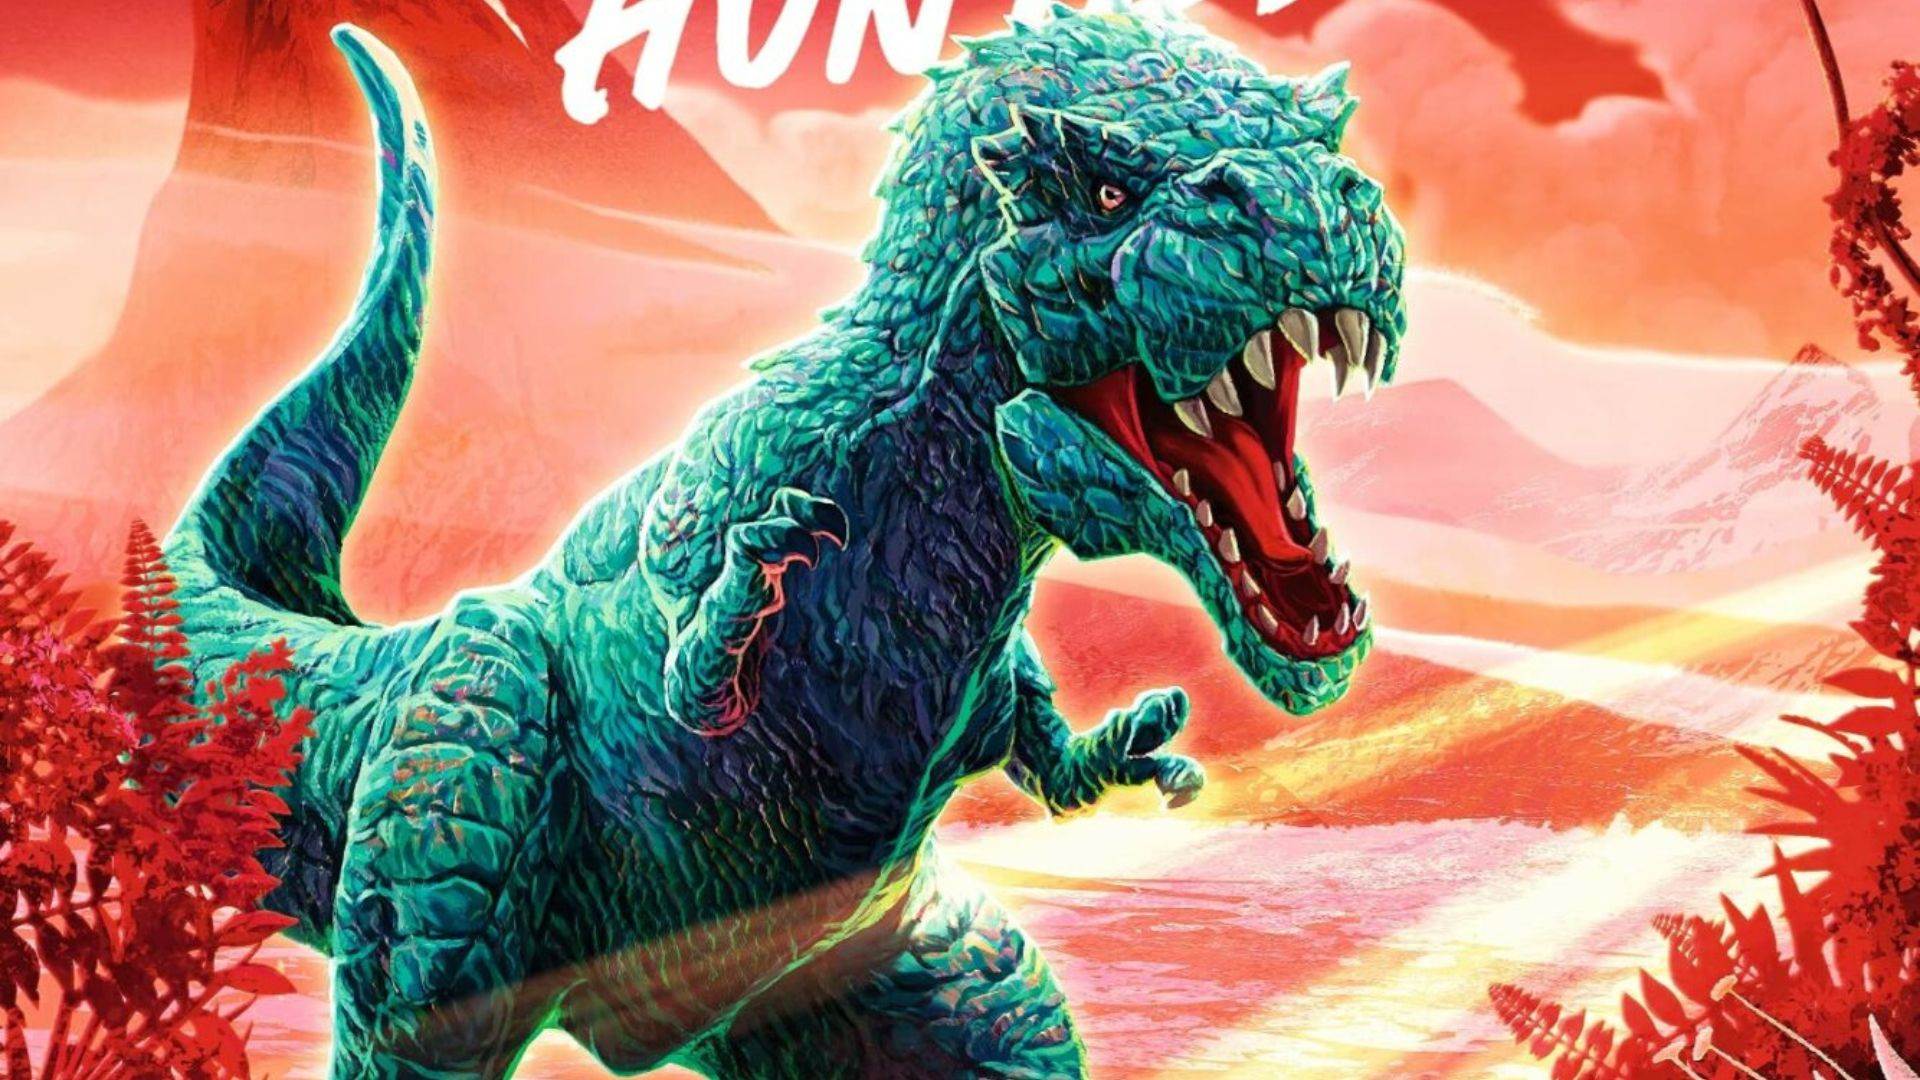 Roarsome Dinosaur Show